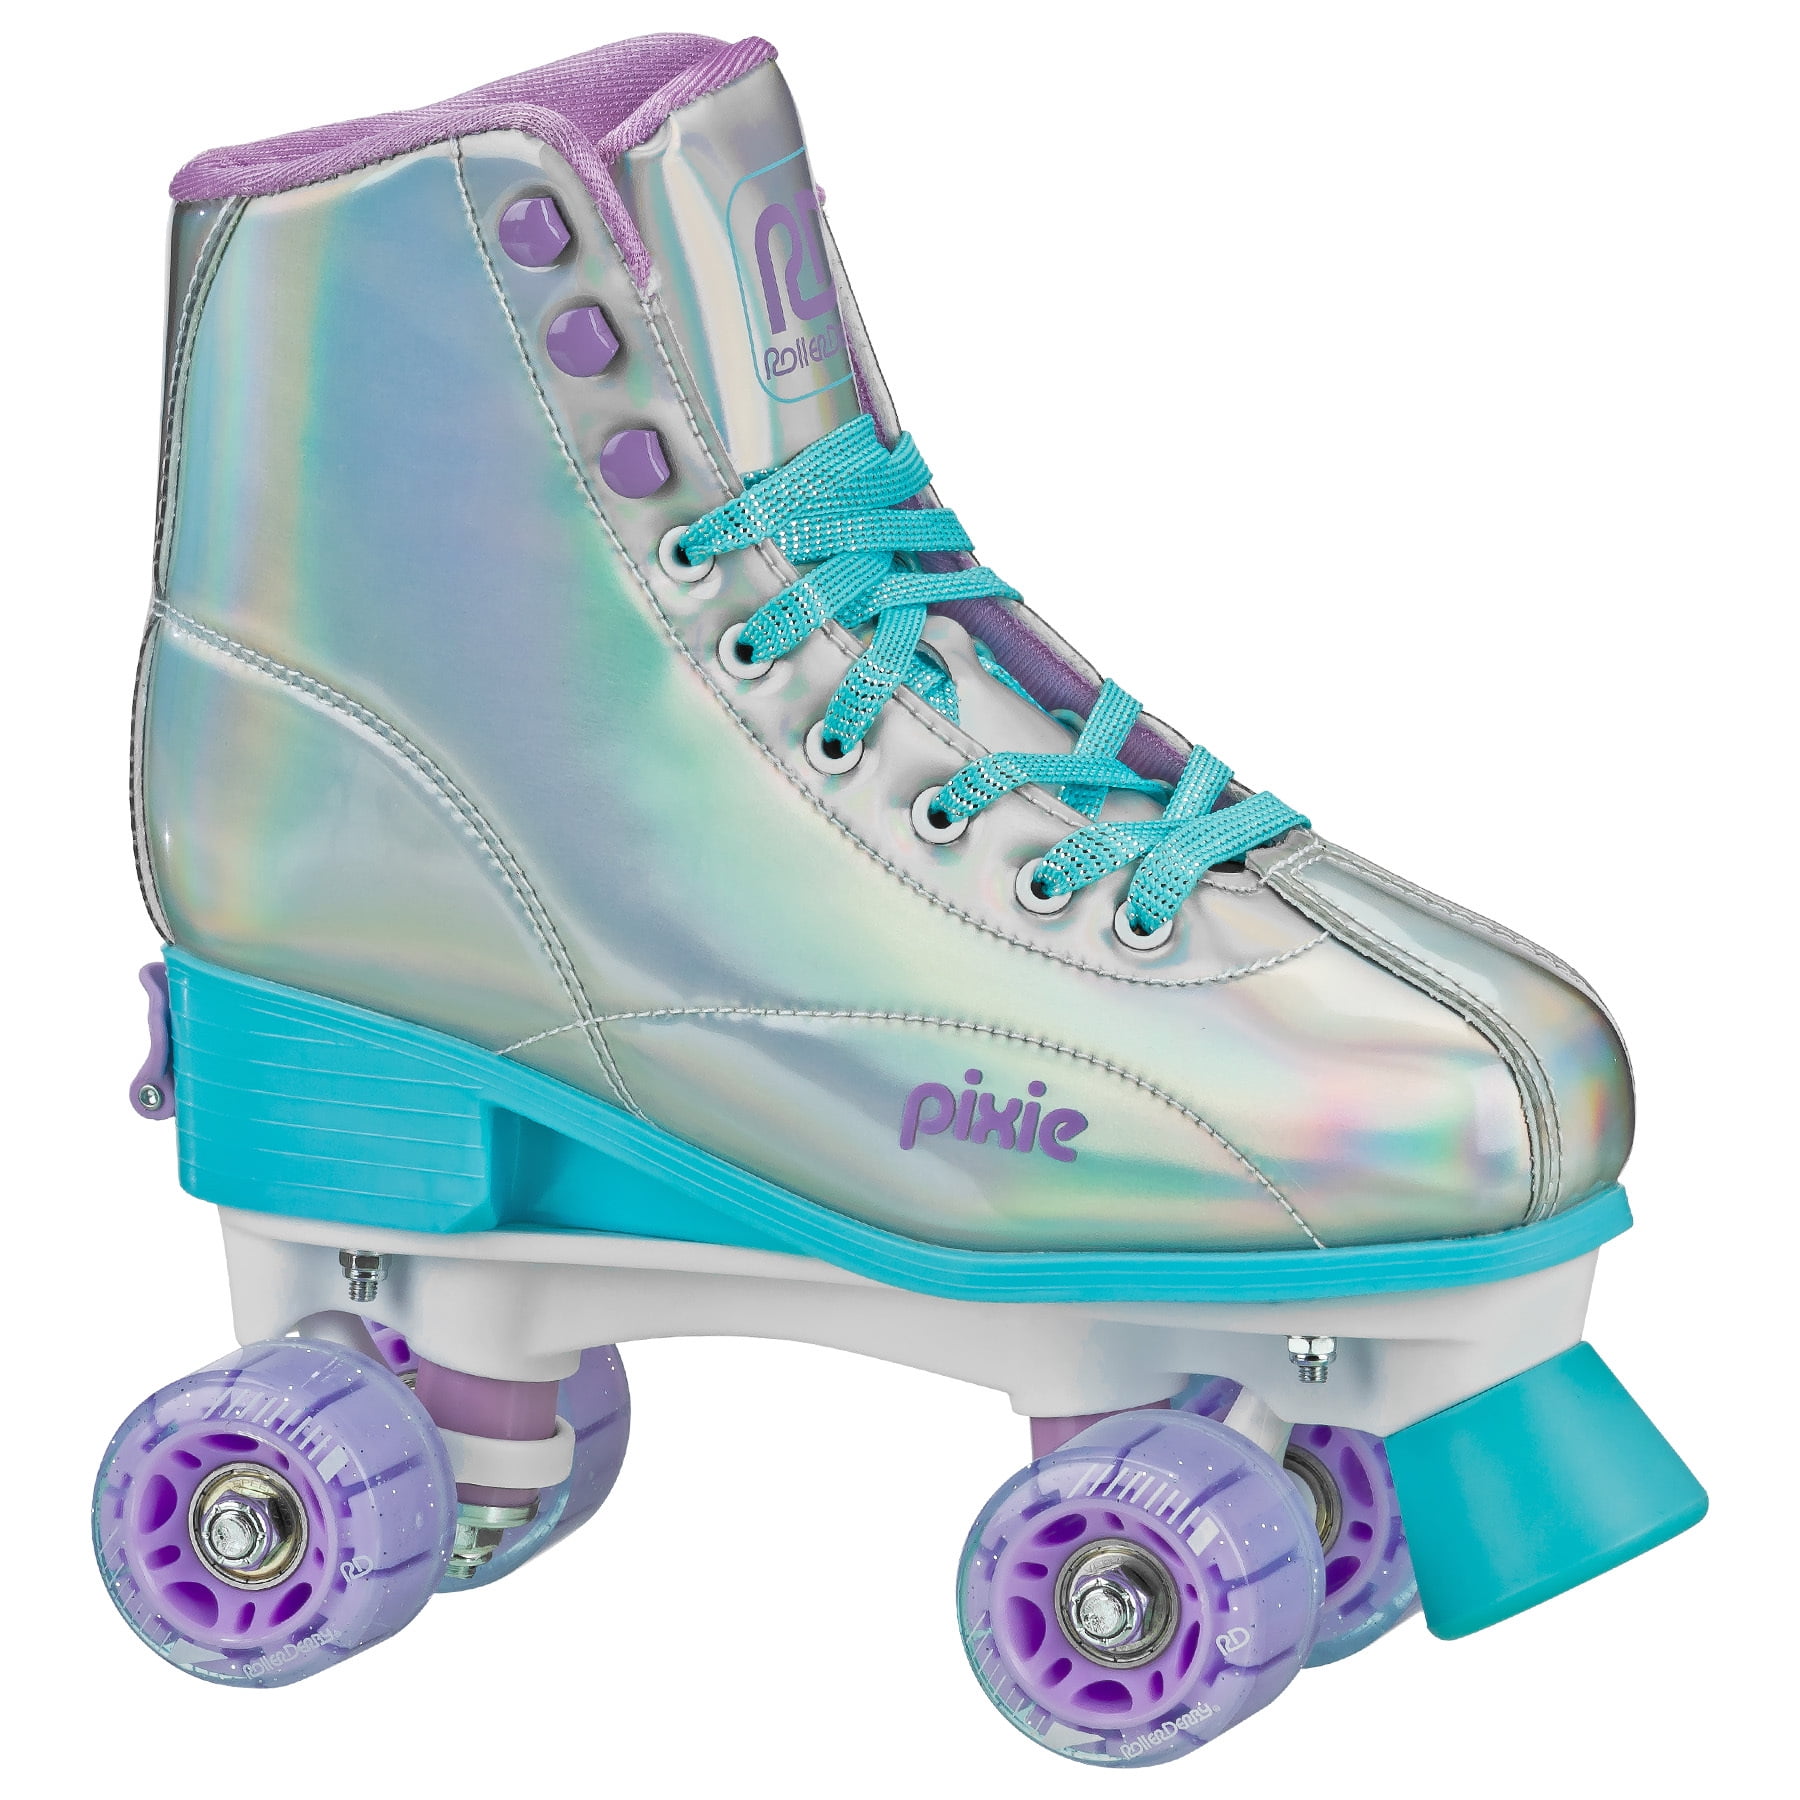 Pack of 4 Rio Roller Flashing Light Up Quad Roller Skate Wheels Cream/Pink 